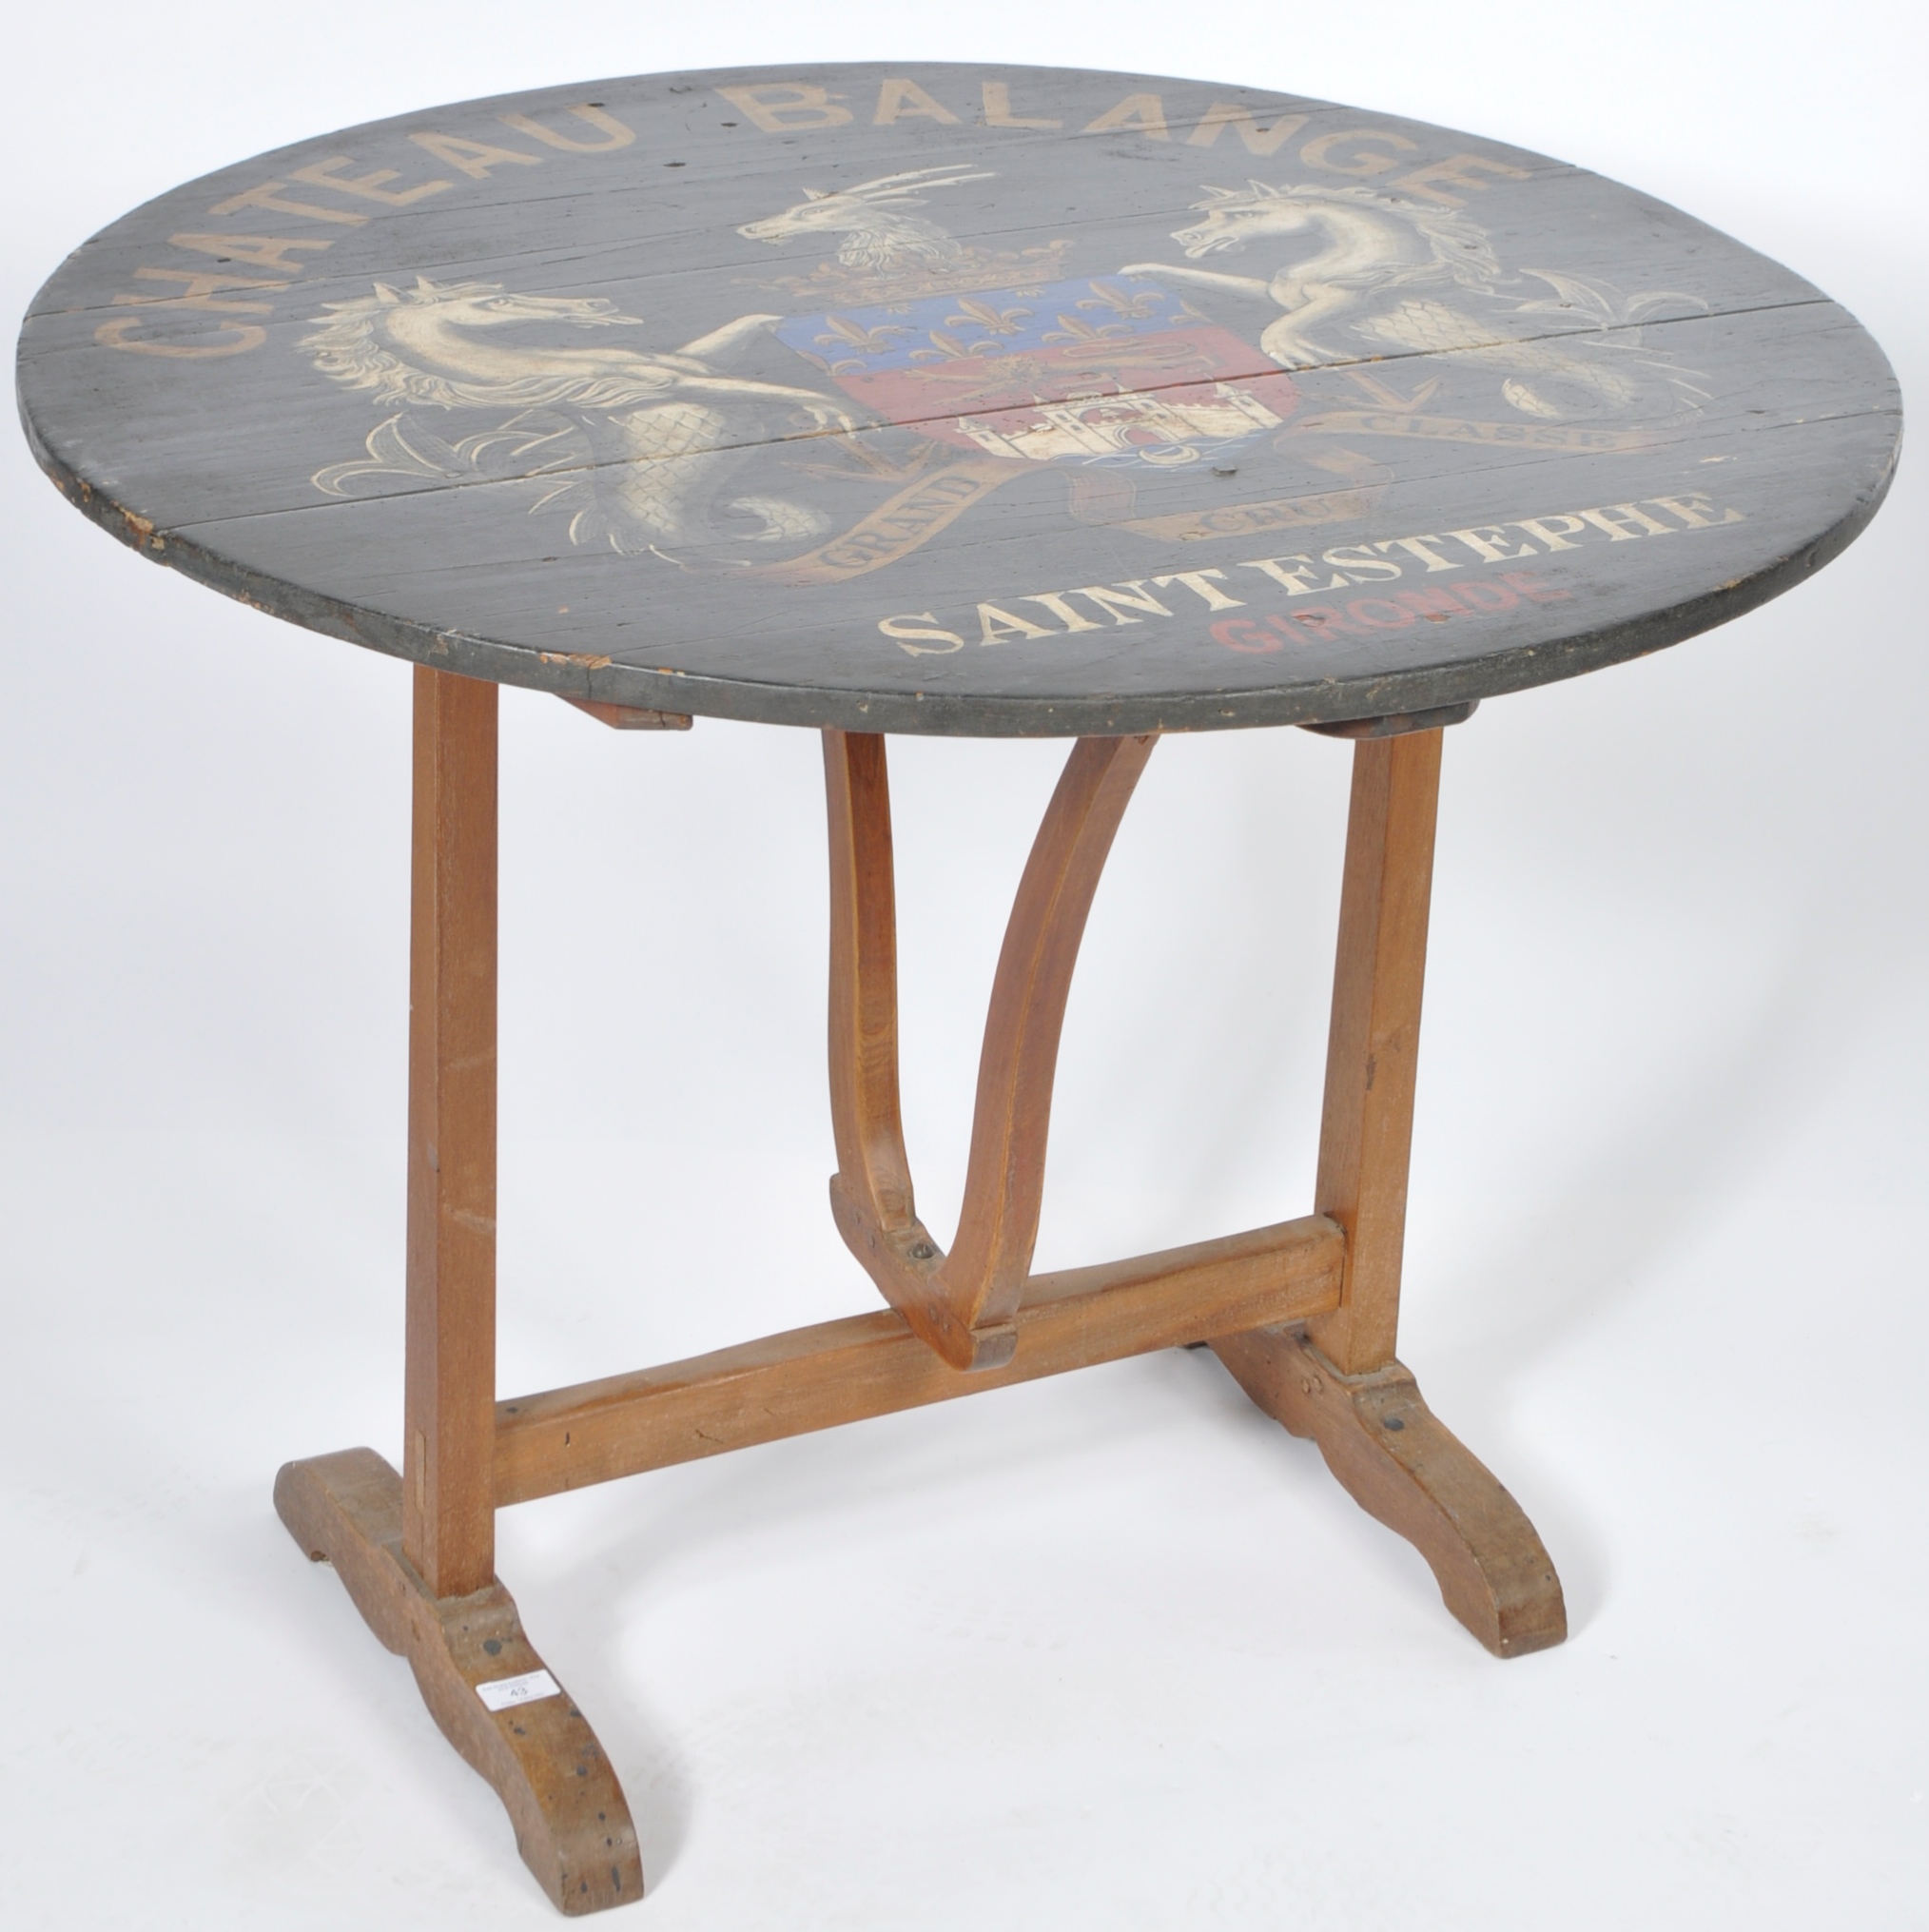 ANTIQUE 19TH CENTURY FRENCH PAINTED VENDANGE TABLE TABLE DE VIGNERON - Image 3 of 7